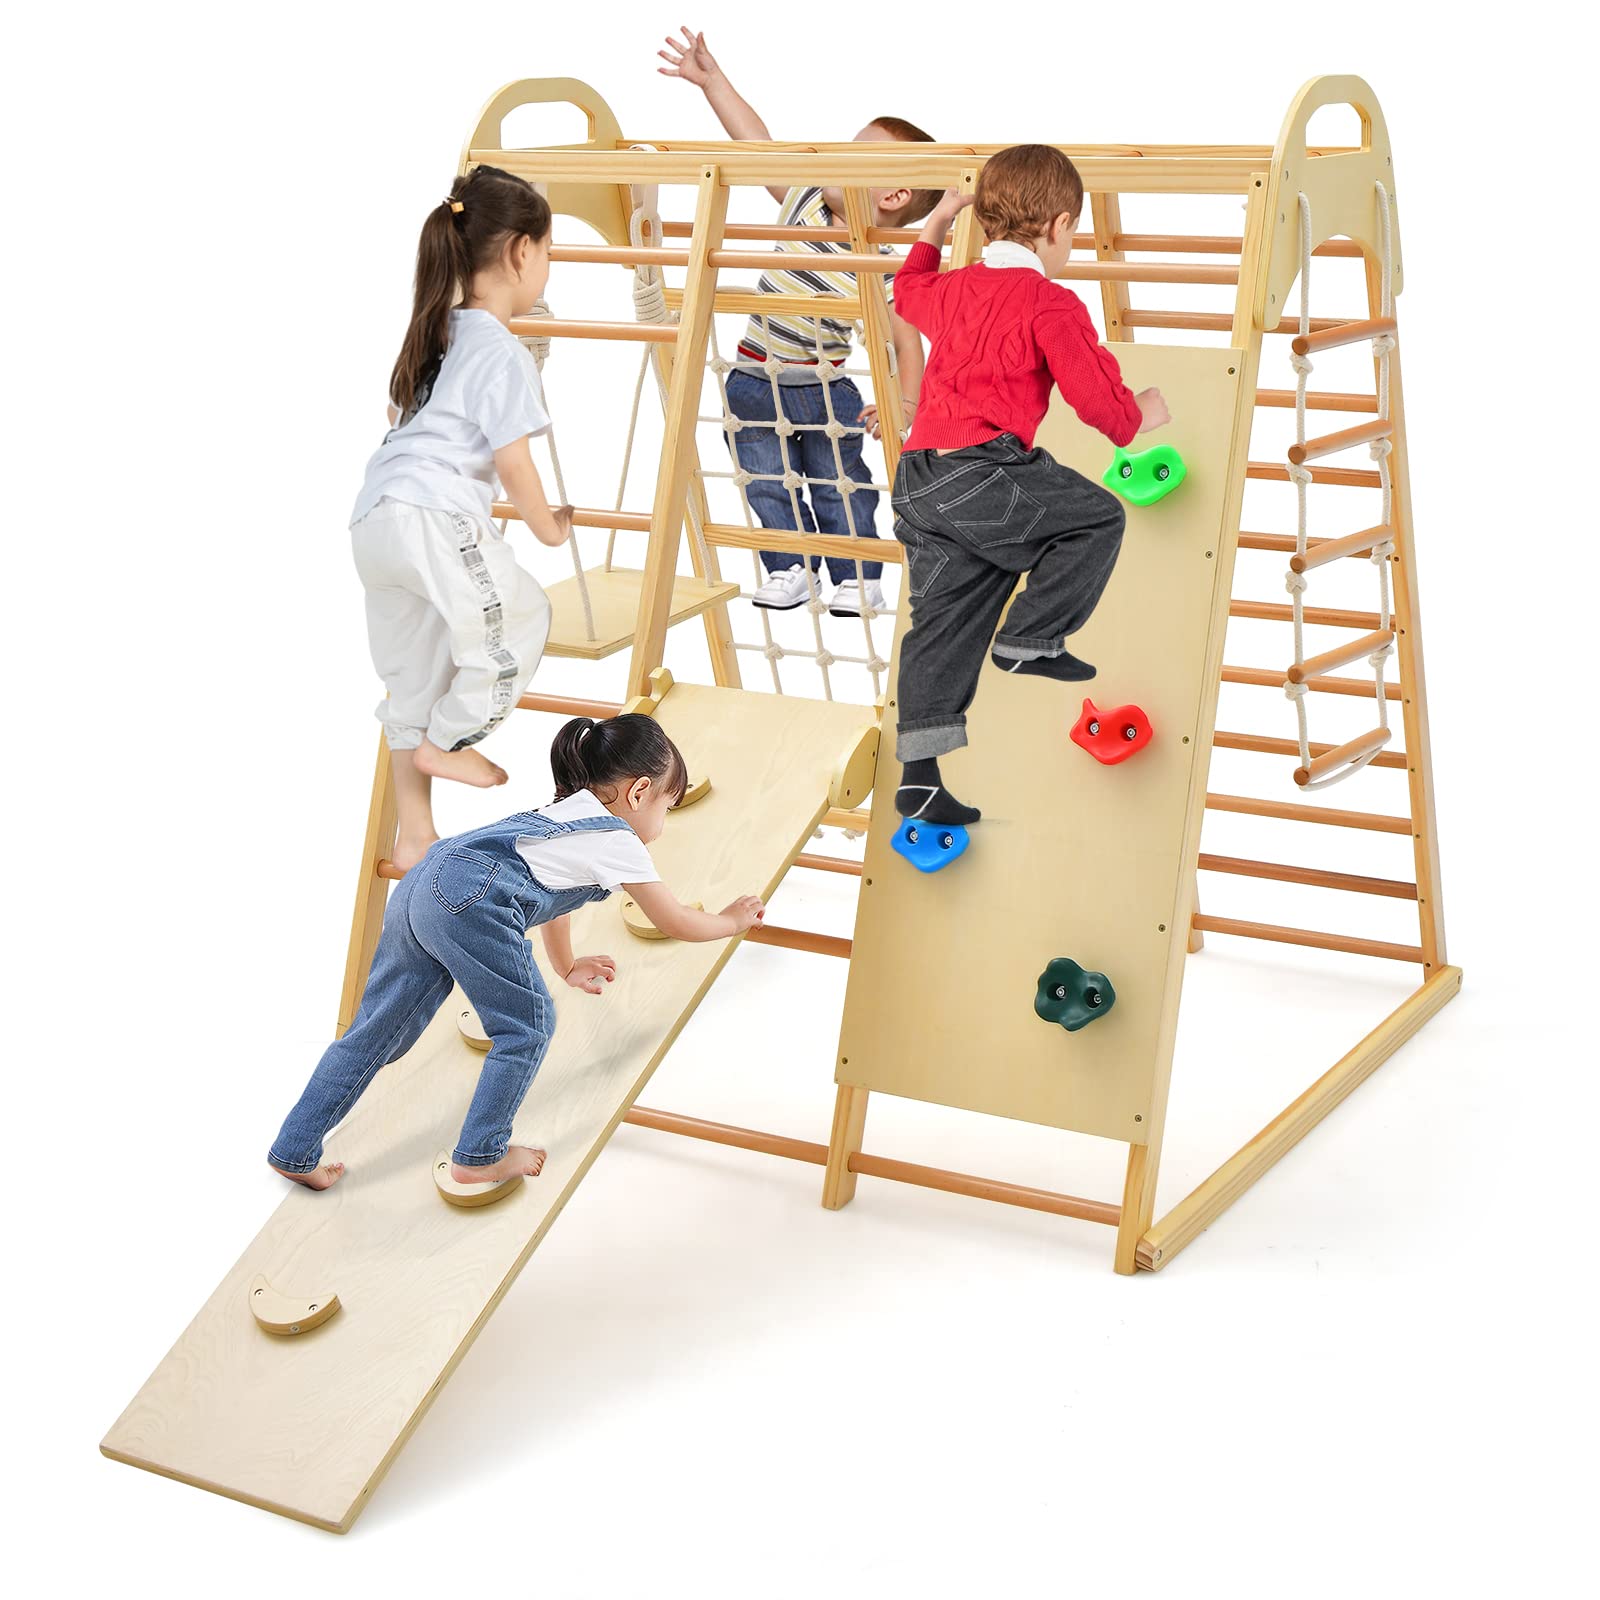 Wooden homemade children's playground - ladder + climbing wall +